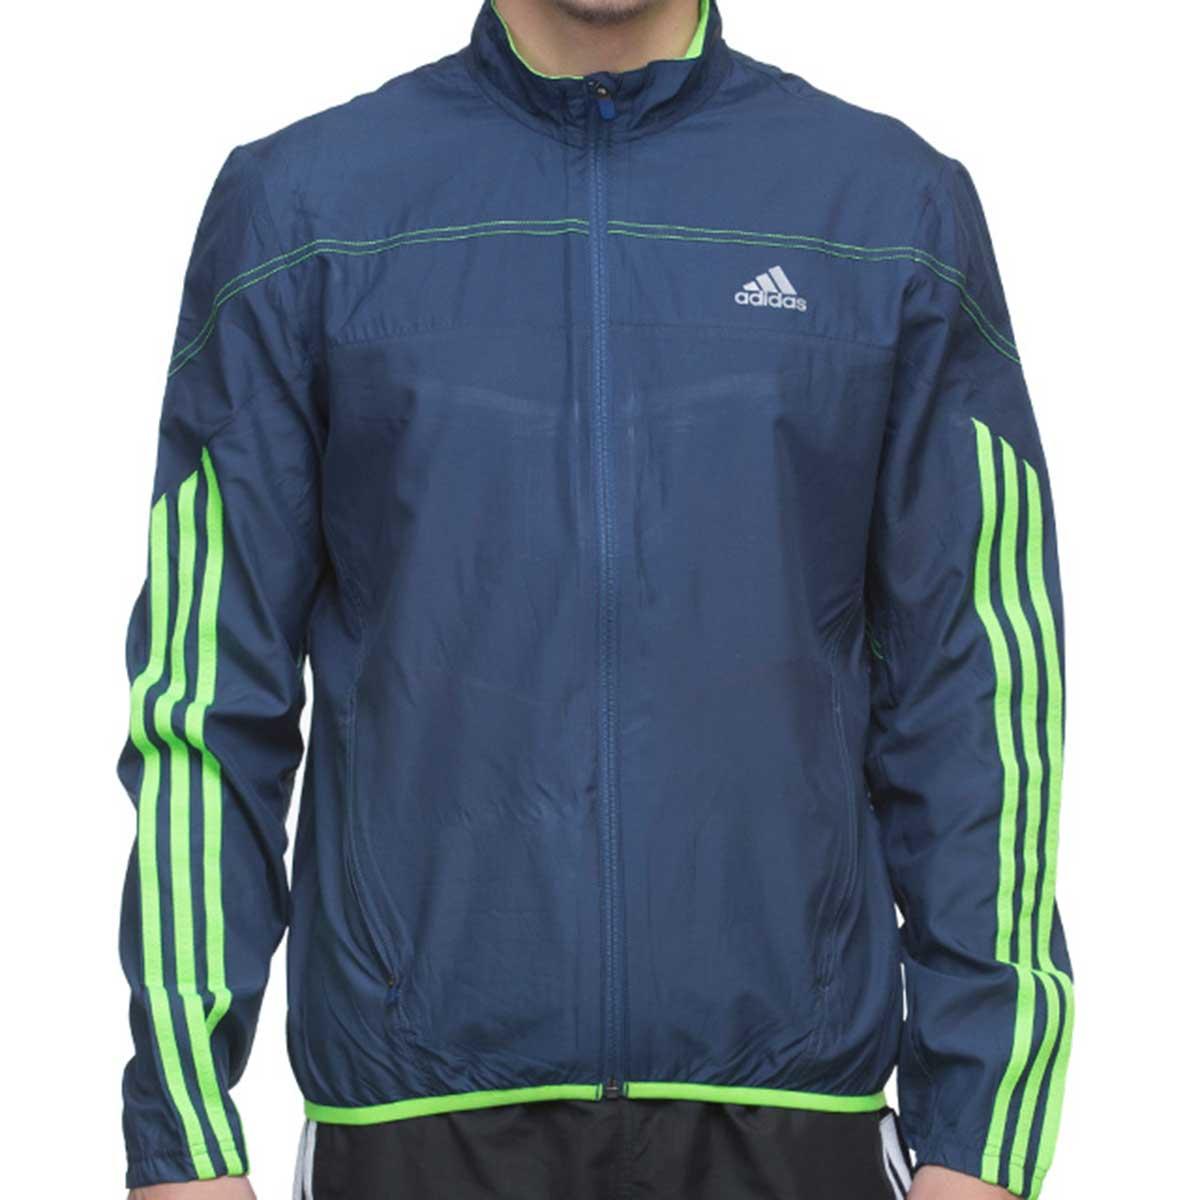 Buy Adidas Mens Running Response Jacket India| Adidas Jackets Clothing Online Store